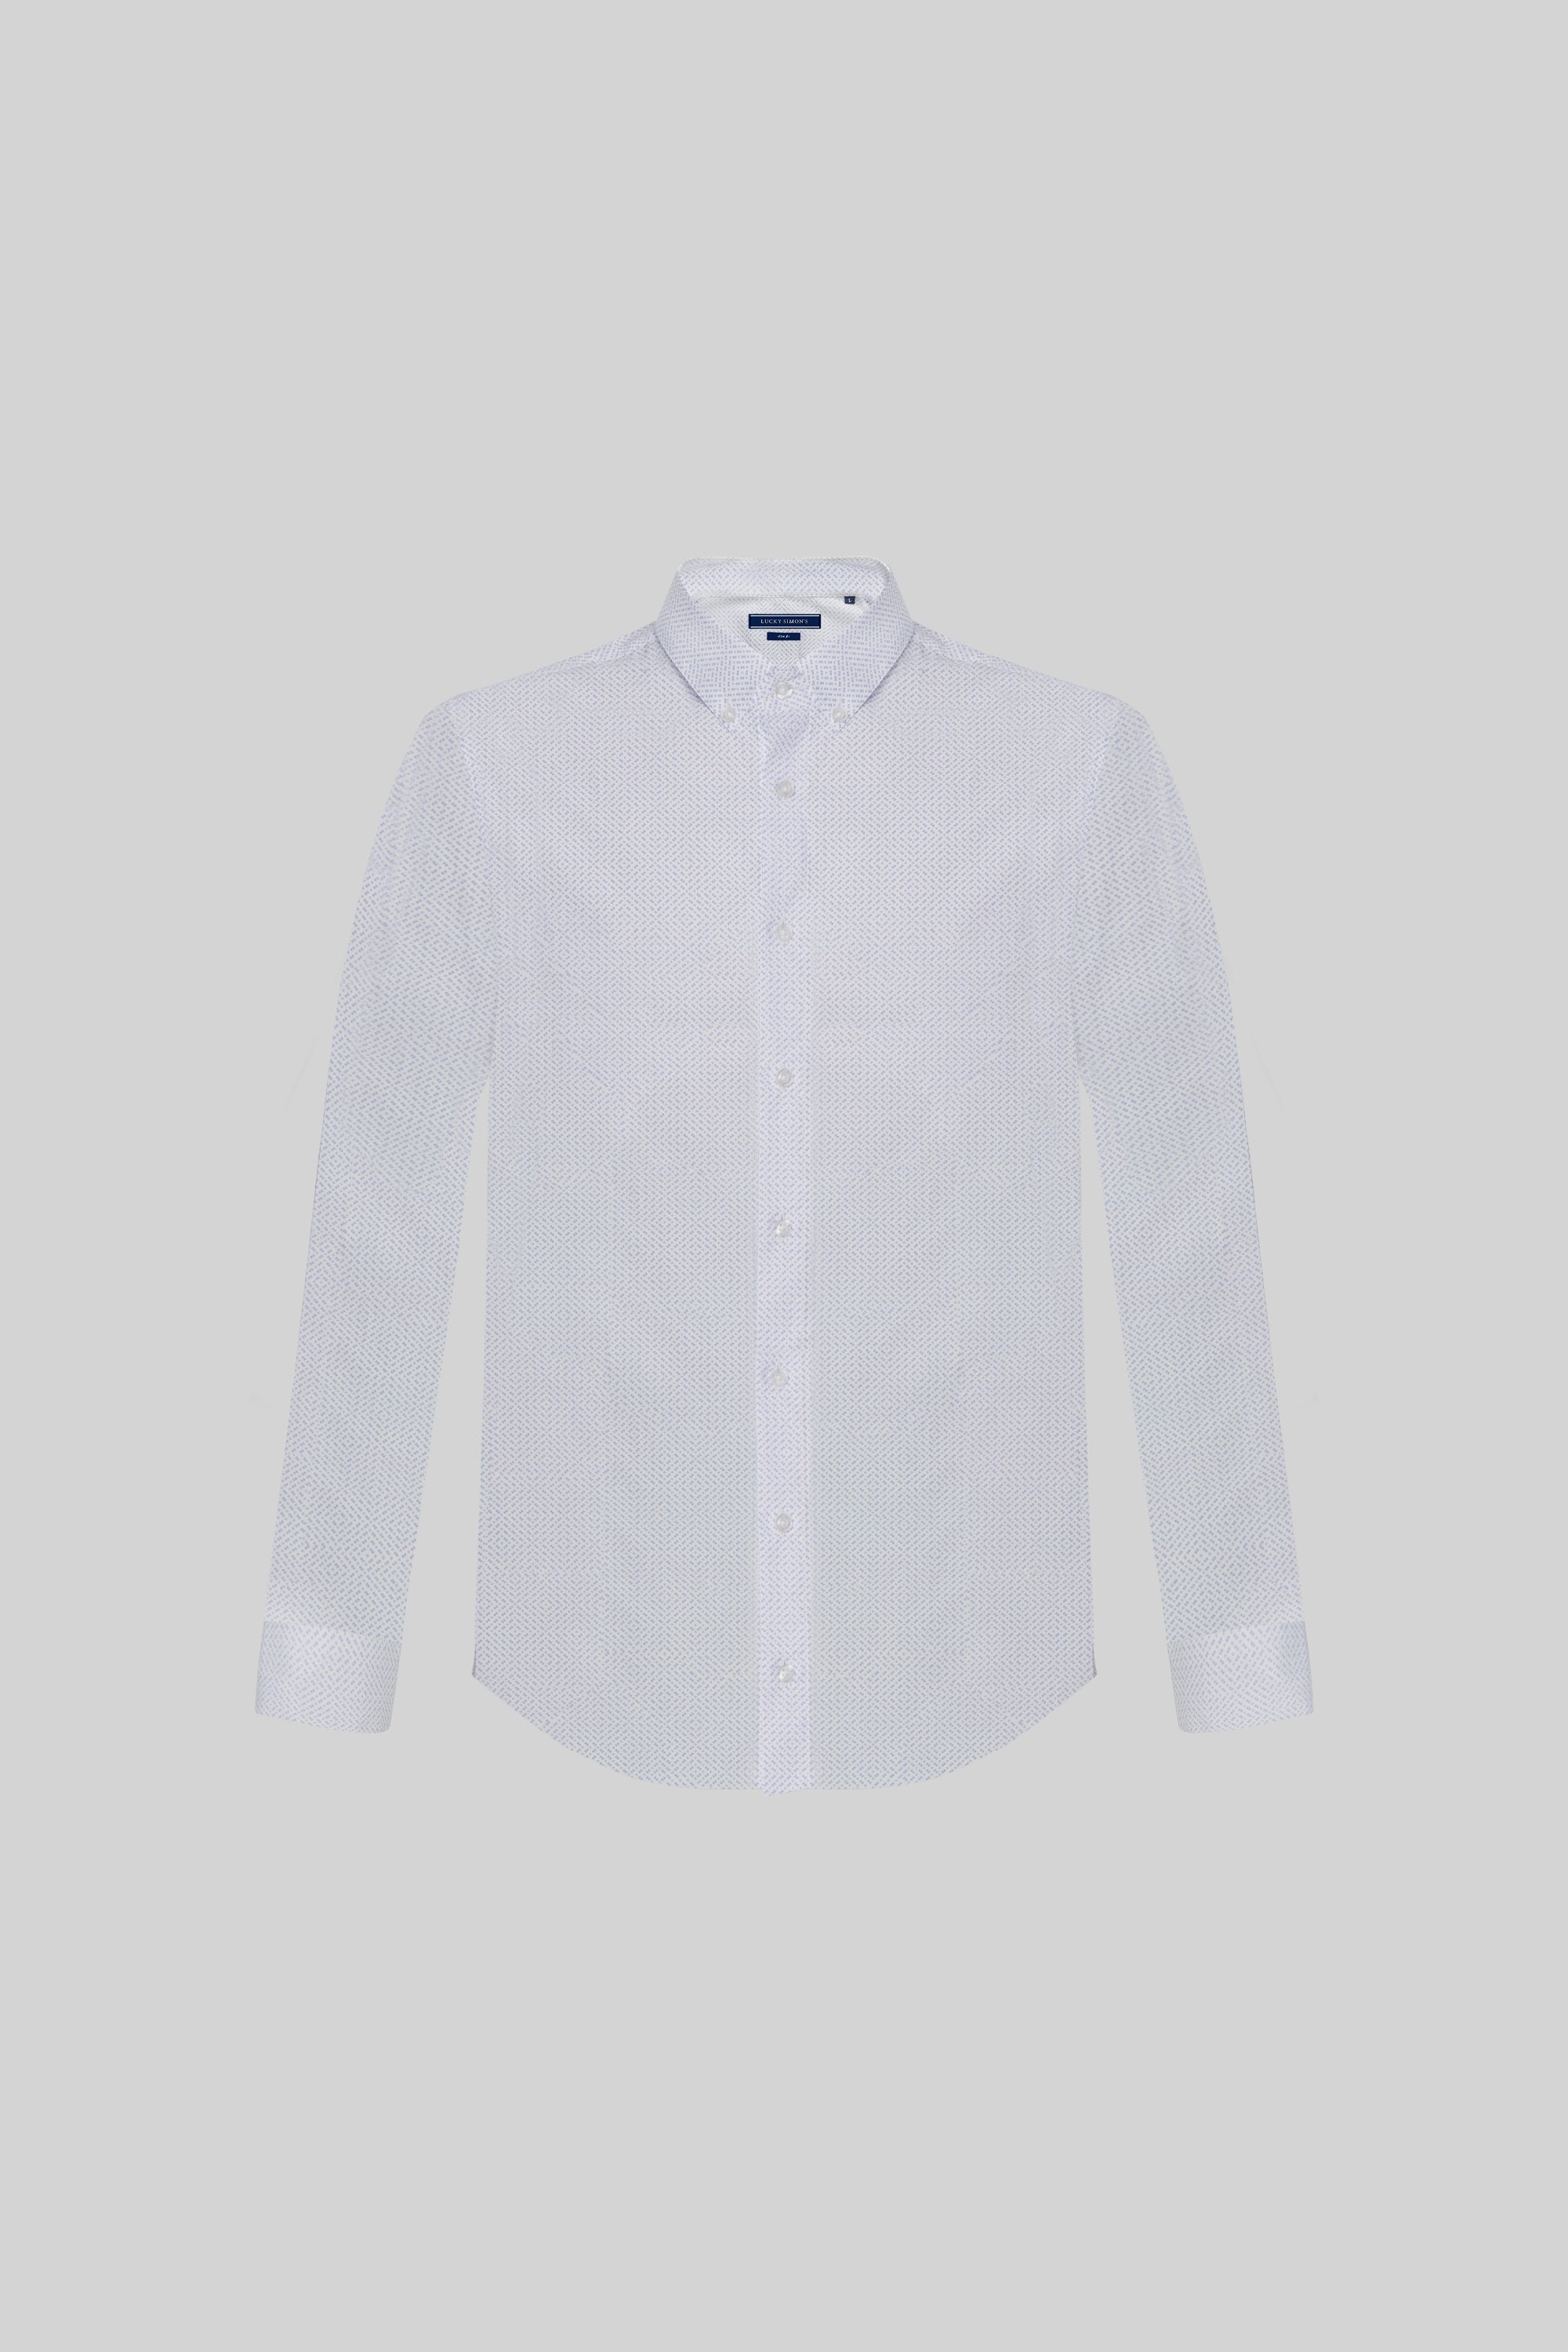 Micromotifs Cotton Slim Shirt